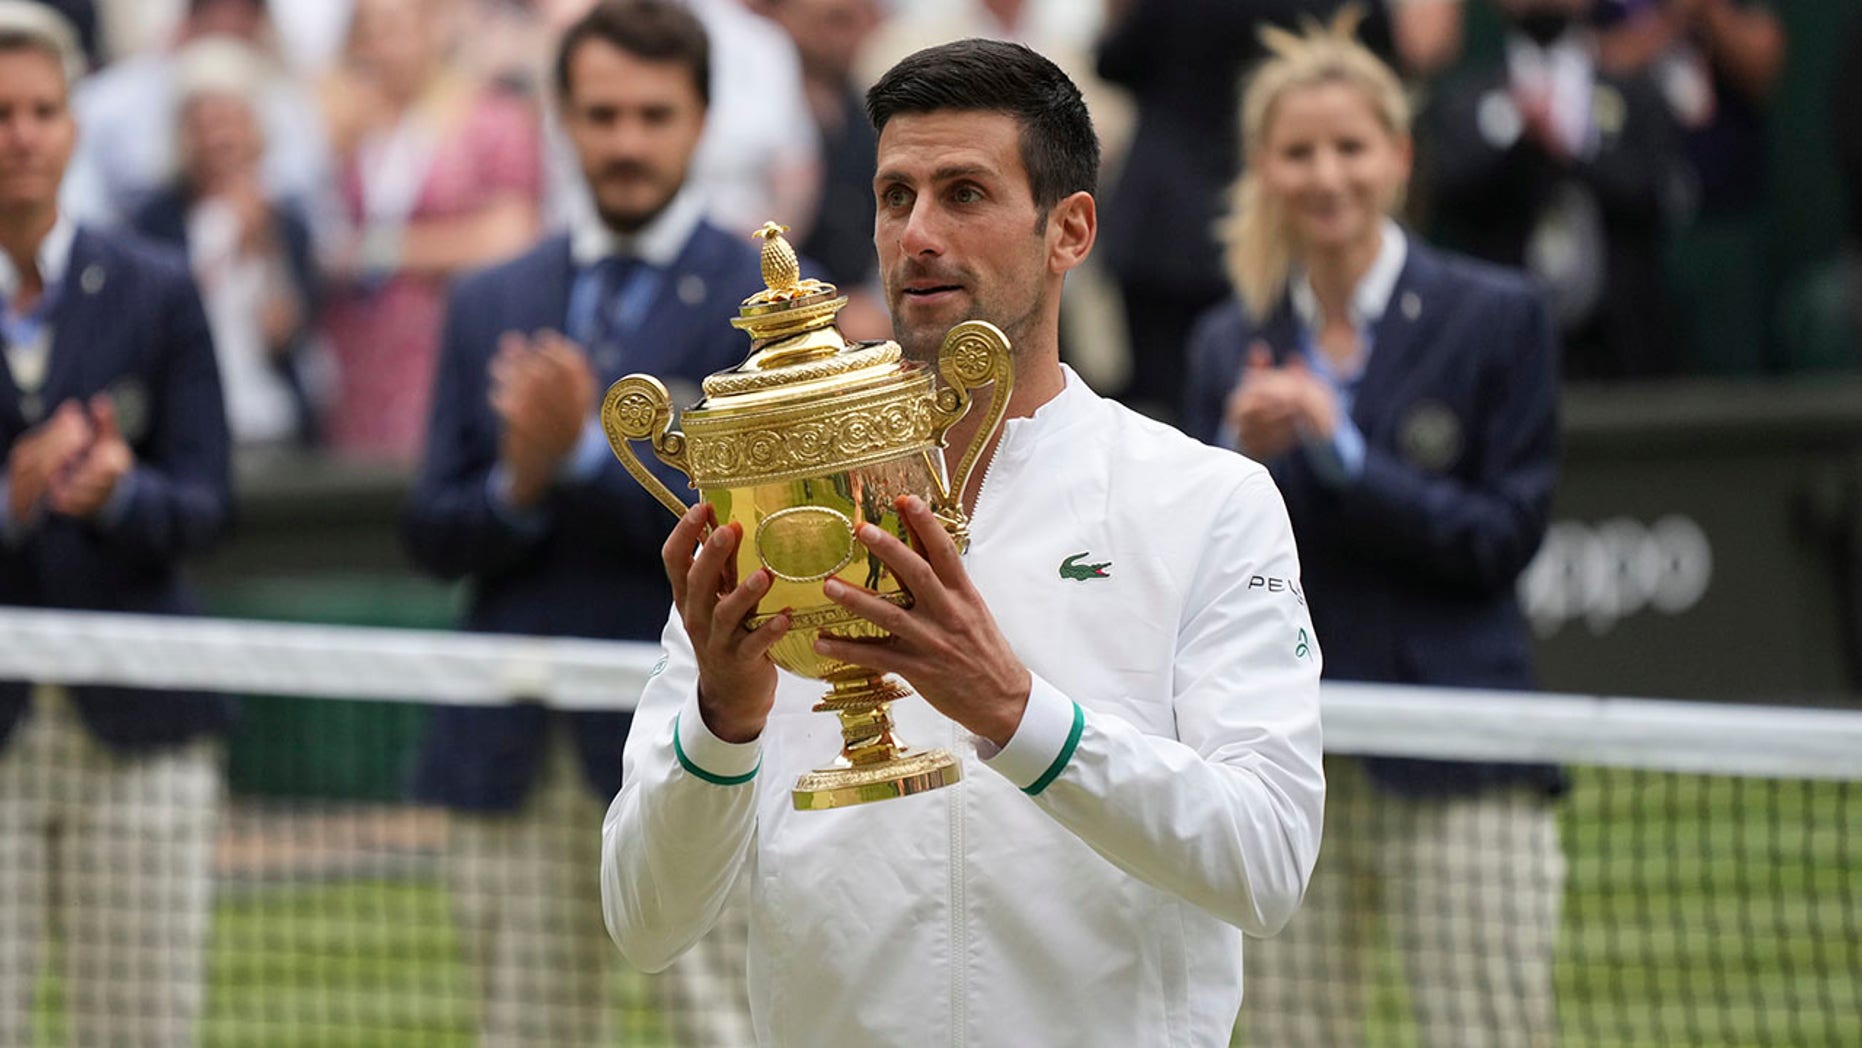 Novak Djokovic wins 20th Grand Slam at Wimbledon, ties men's alltime